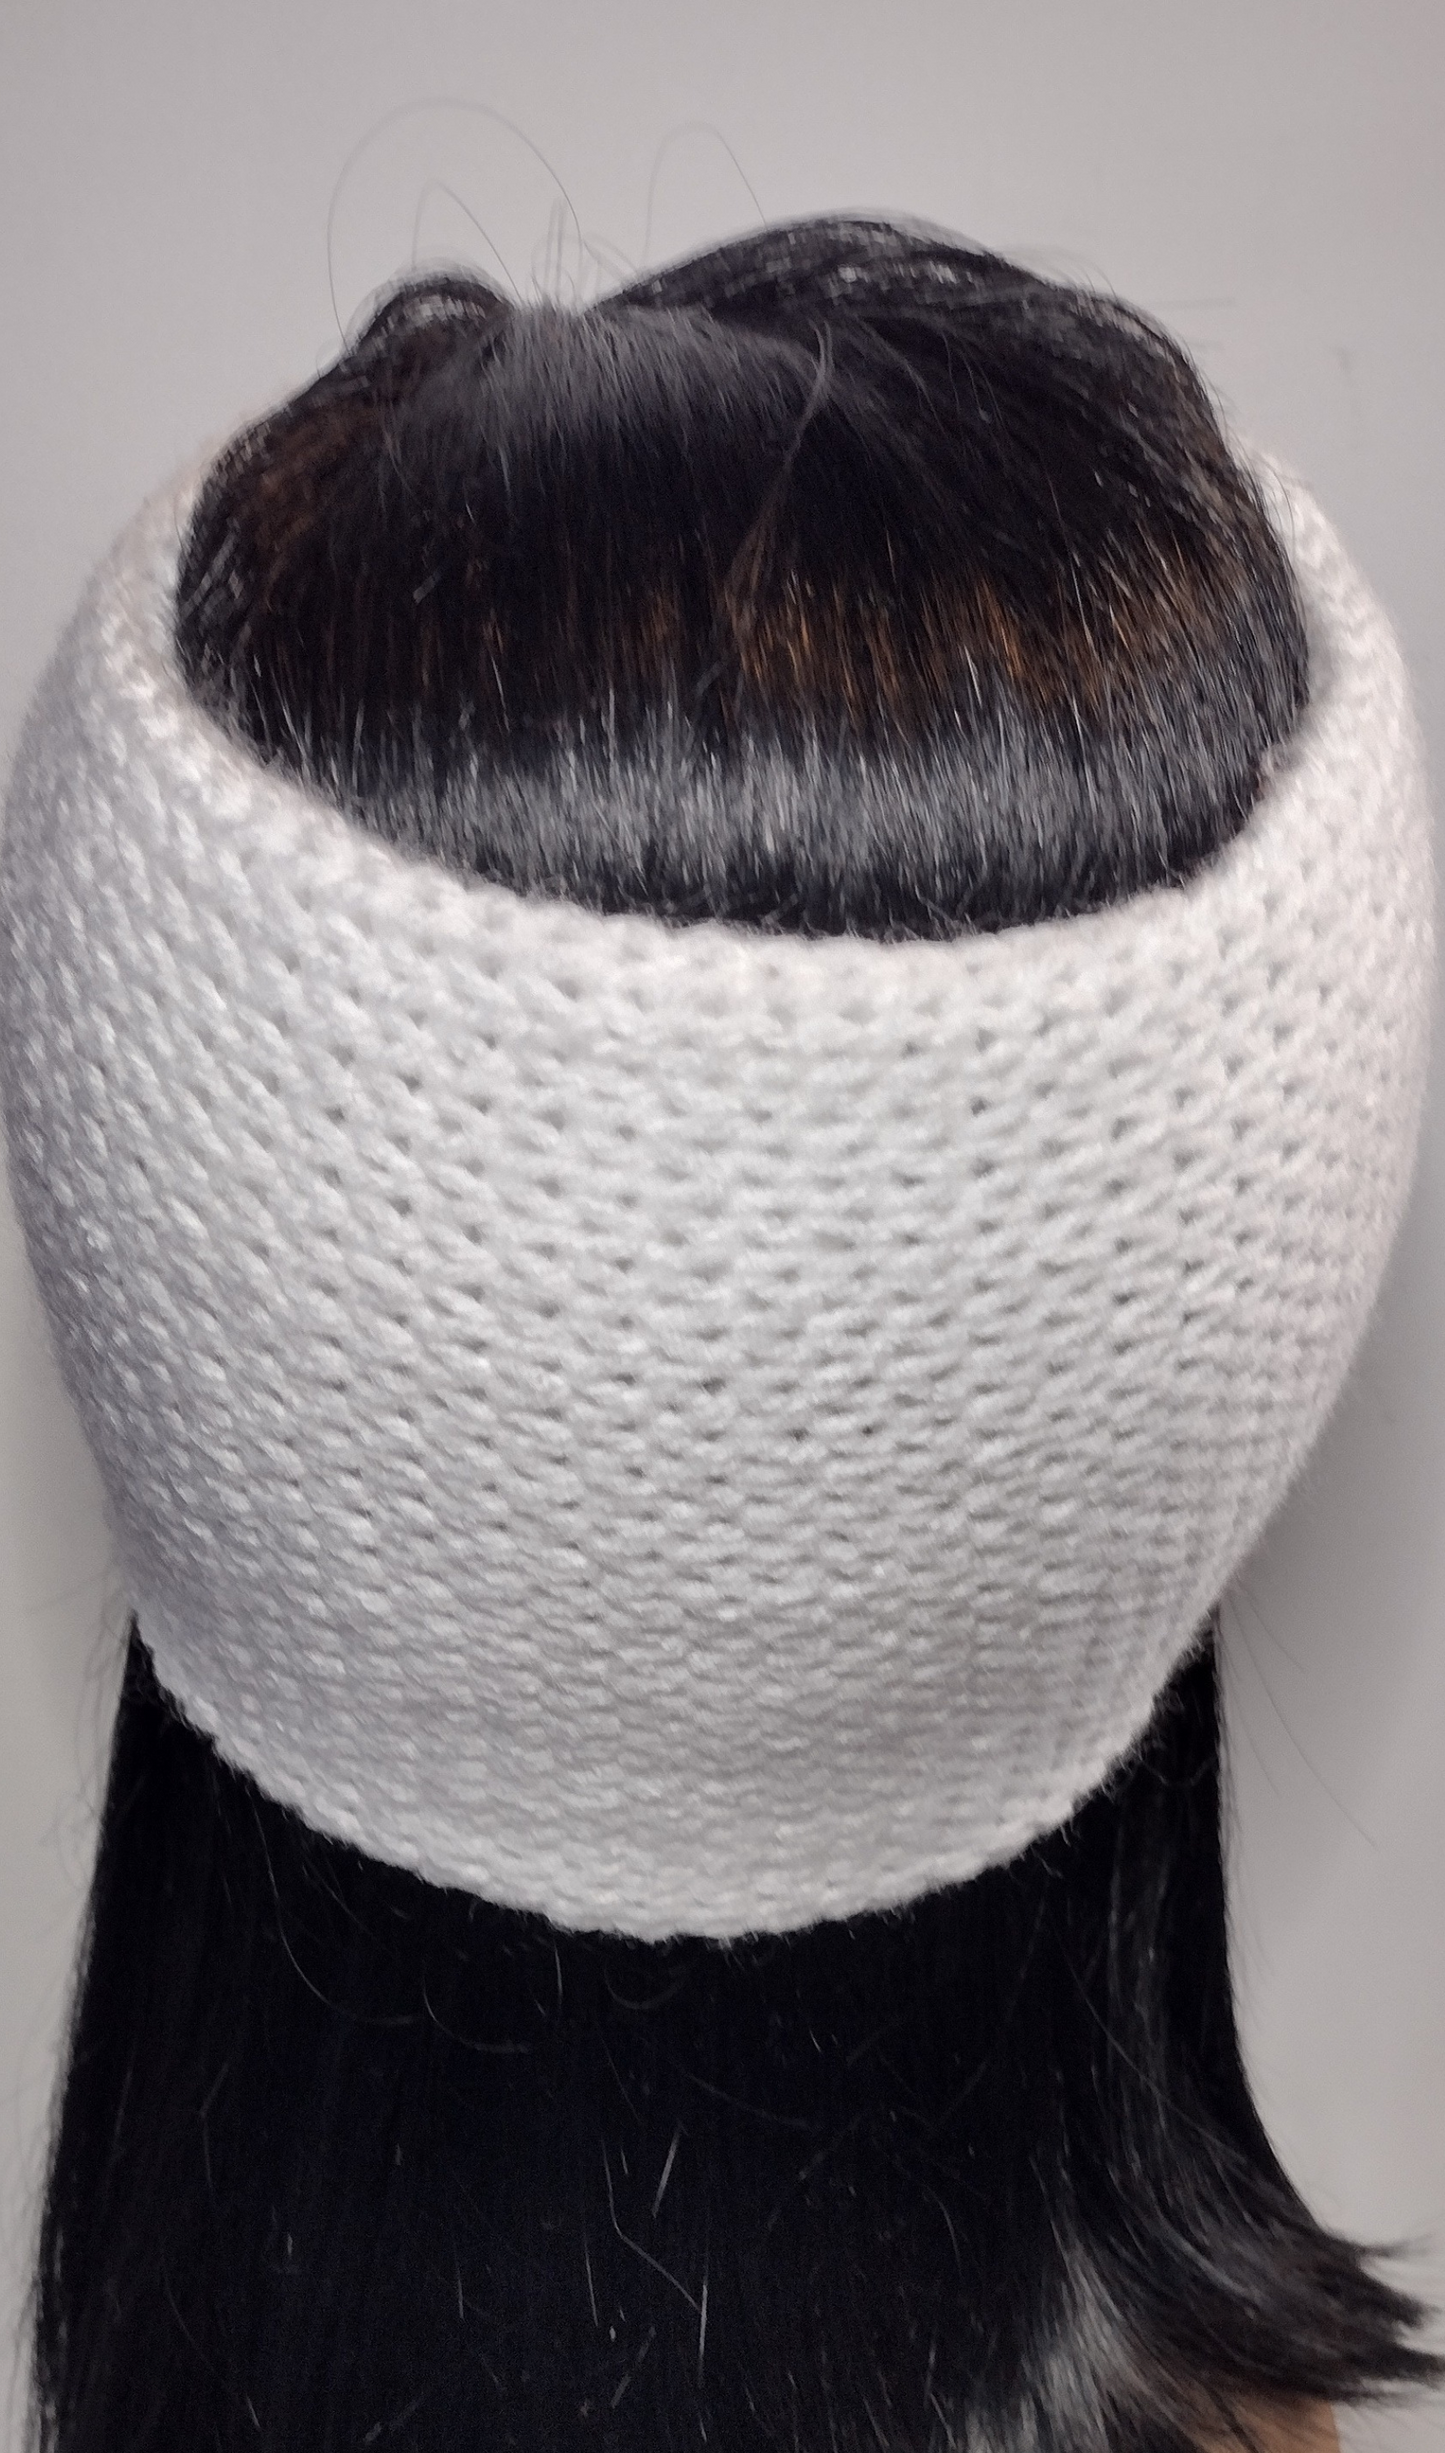 Blk Lotus Co White Twist Knit Headband: Timeless Elegance and Winter Comfort